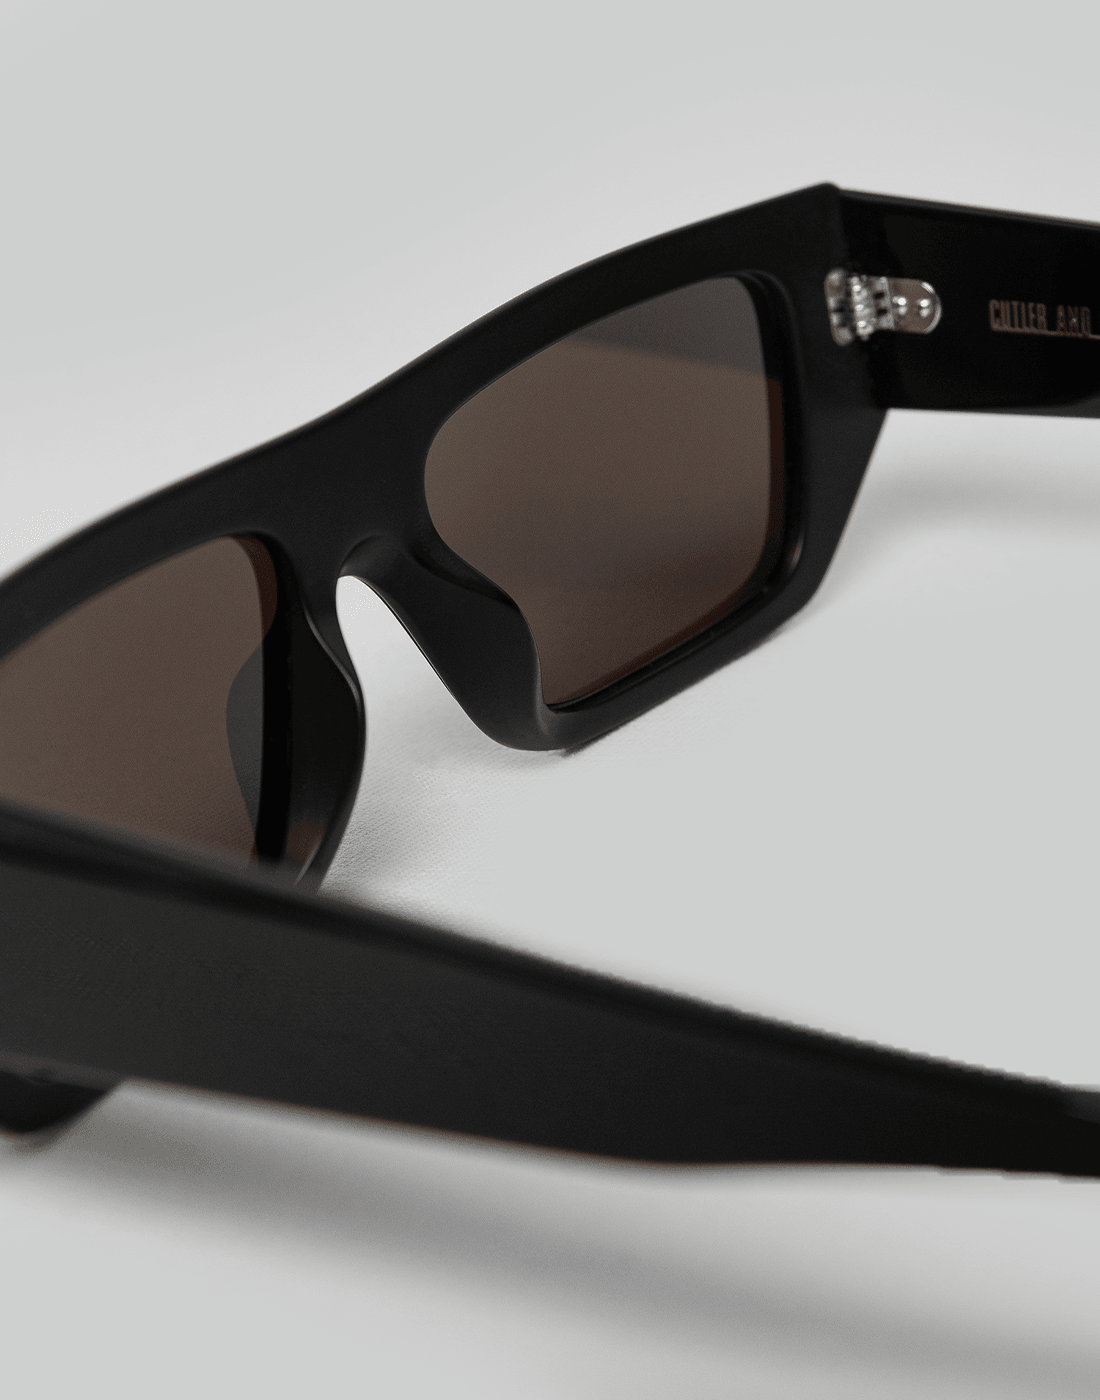 Juun.J x Cutler and Gross 1367 Browline Sunglasses - 082plus